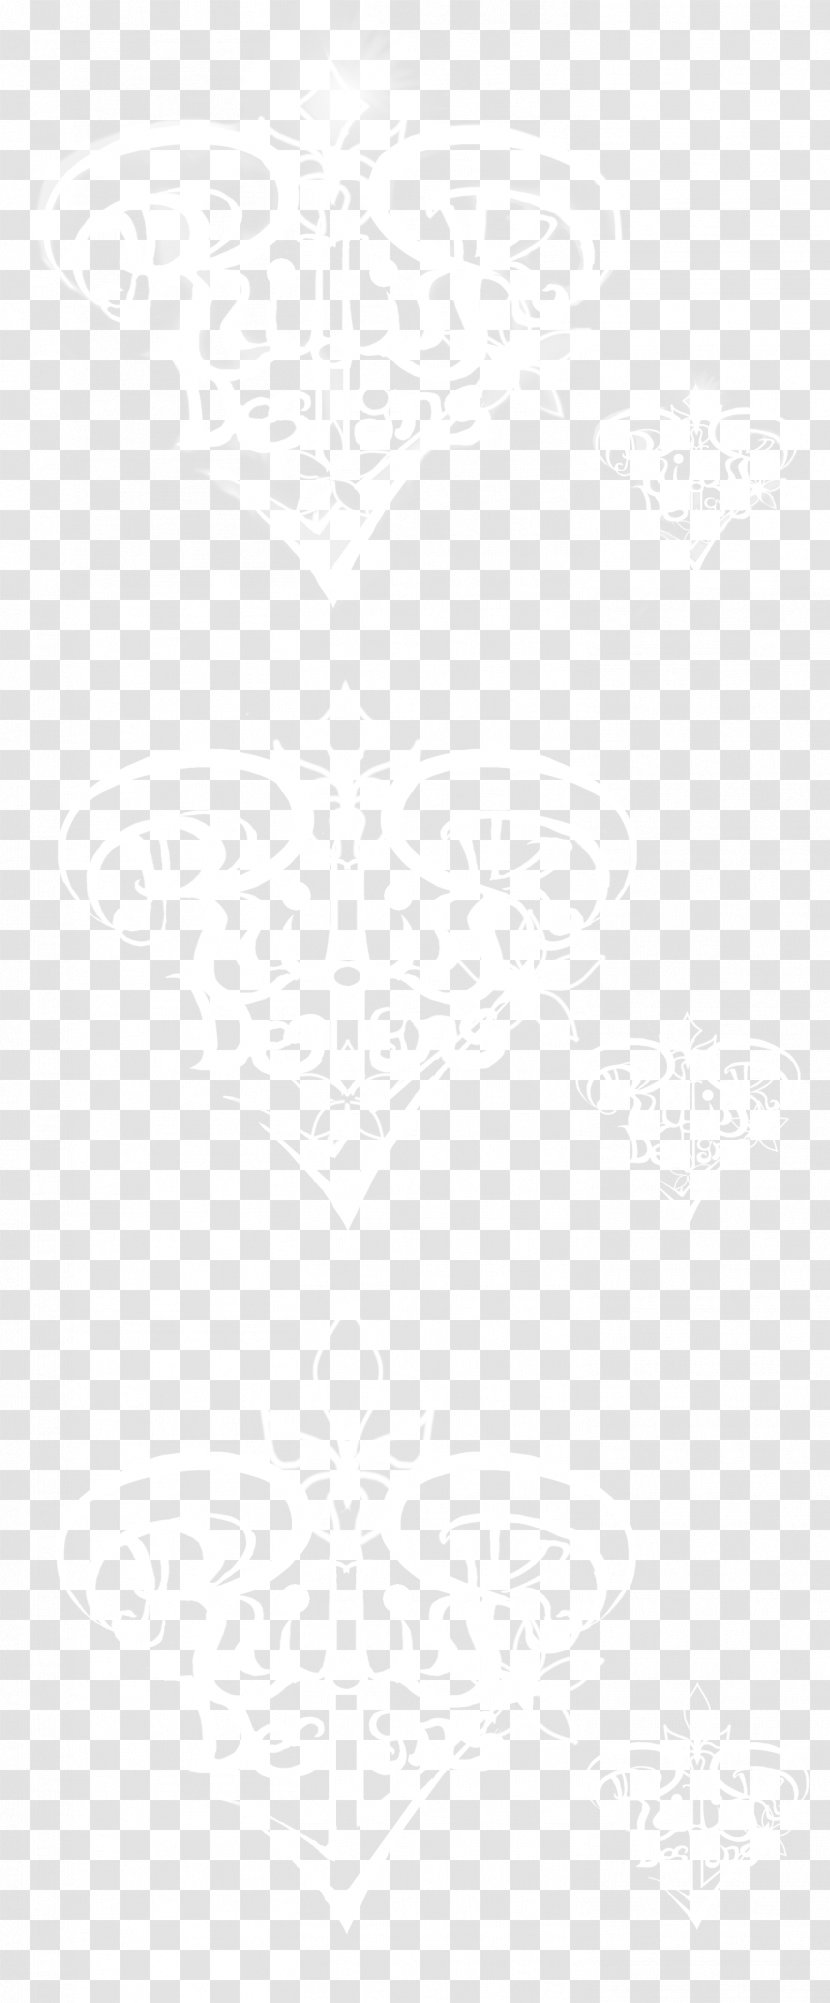 Graphic Design Visual Arts Logo - Watermark Pattern Transparent PNG